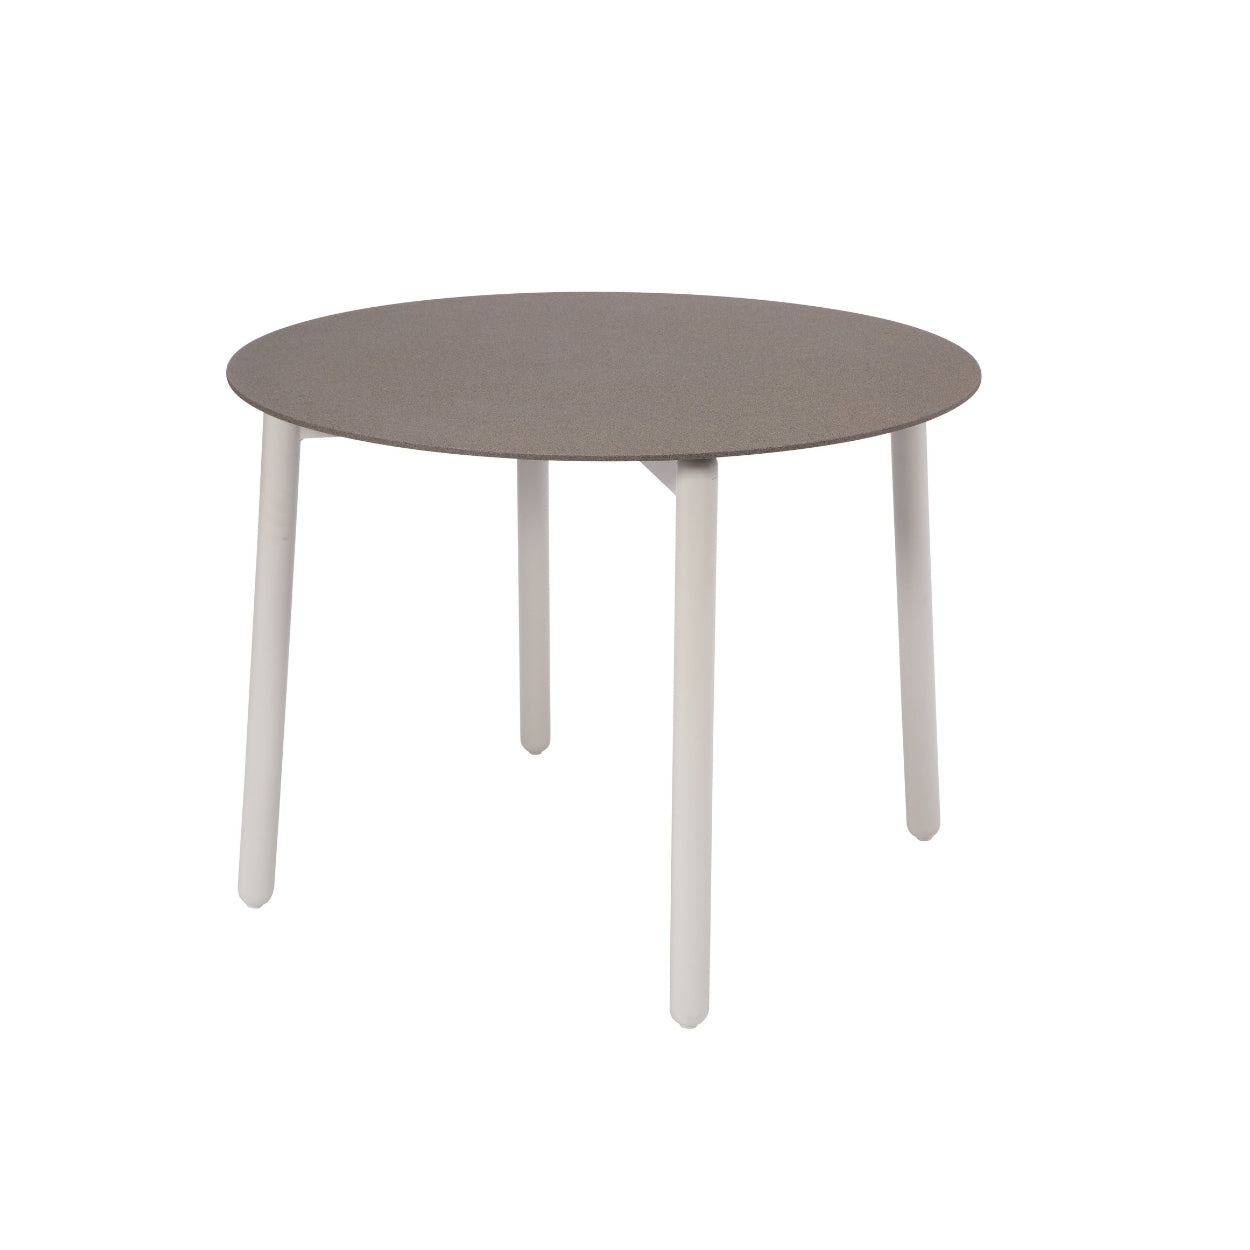 Round Spray Stone Table with Aluminium legs